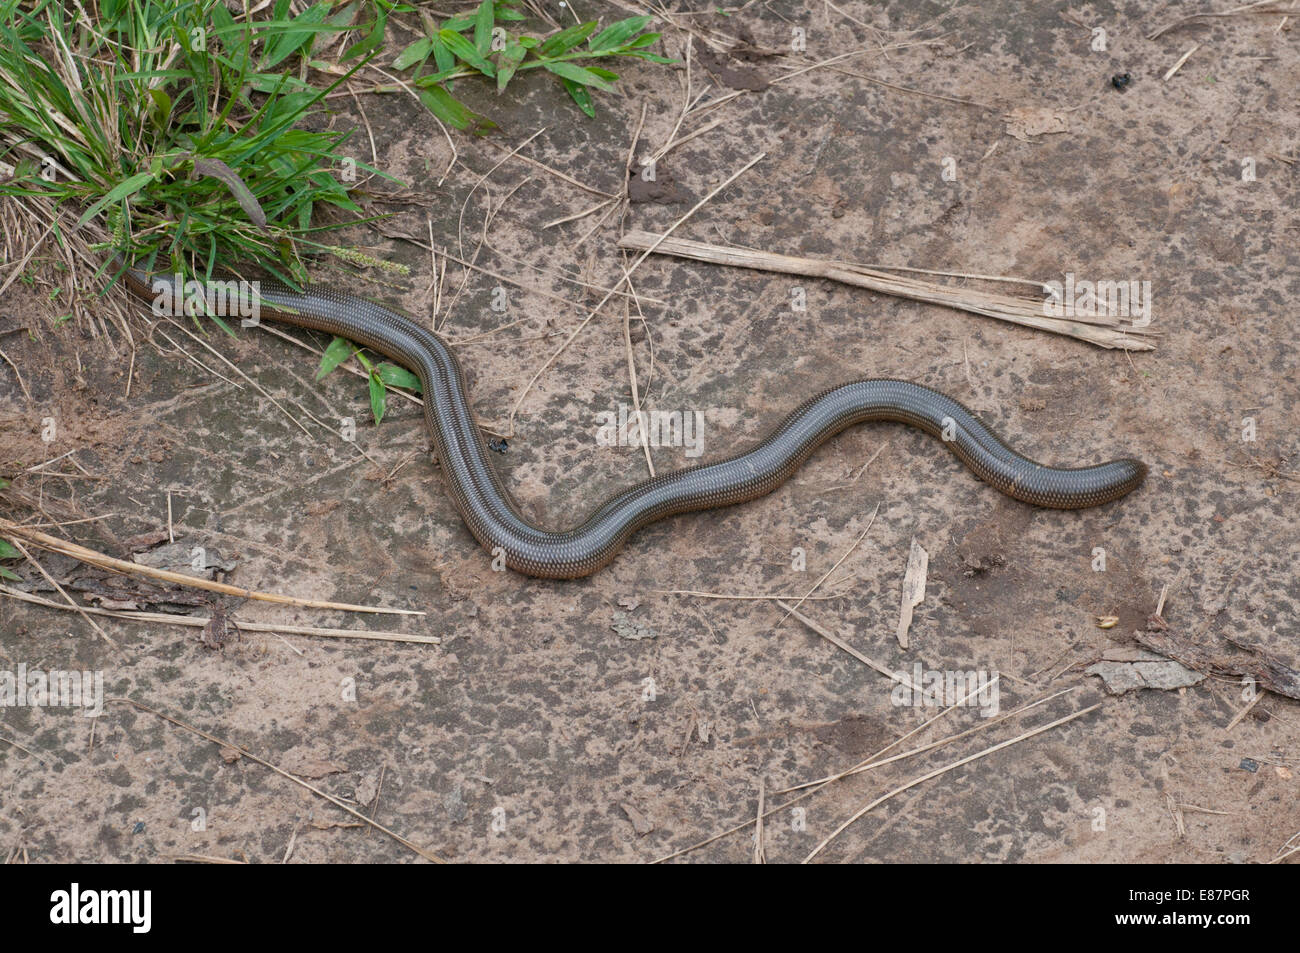 Spotted Bind Snake crossing the path at Agumastsa, Wli, Ghana Stock Photo